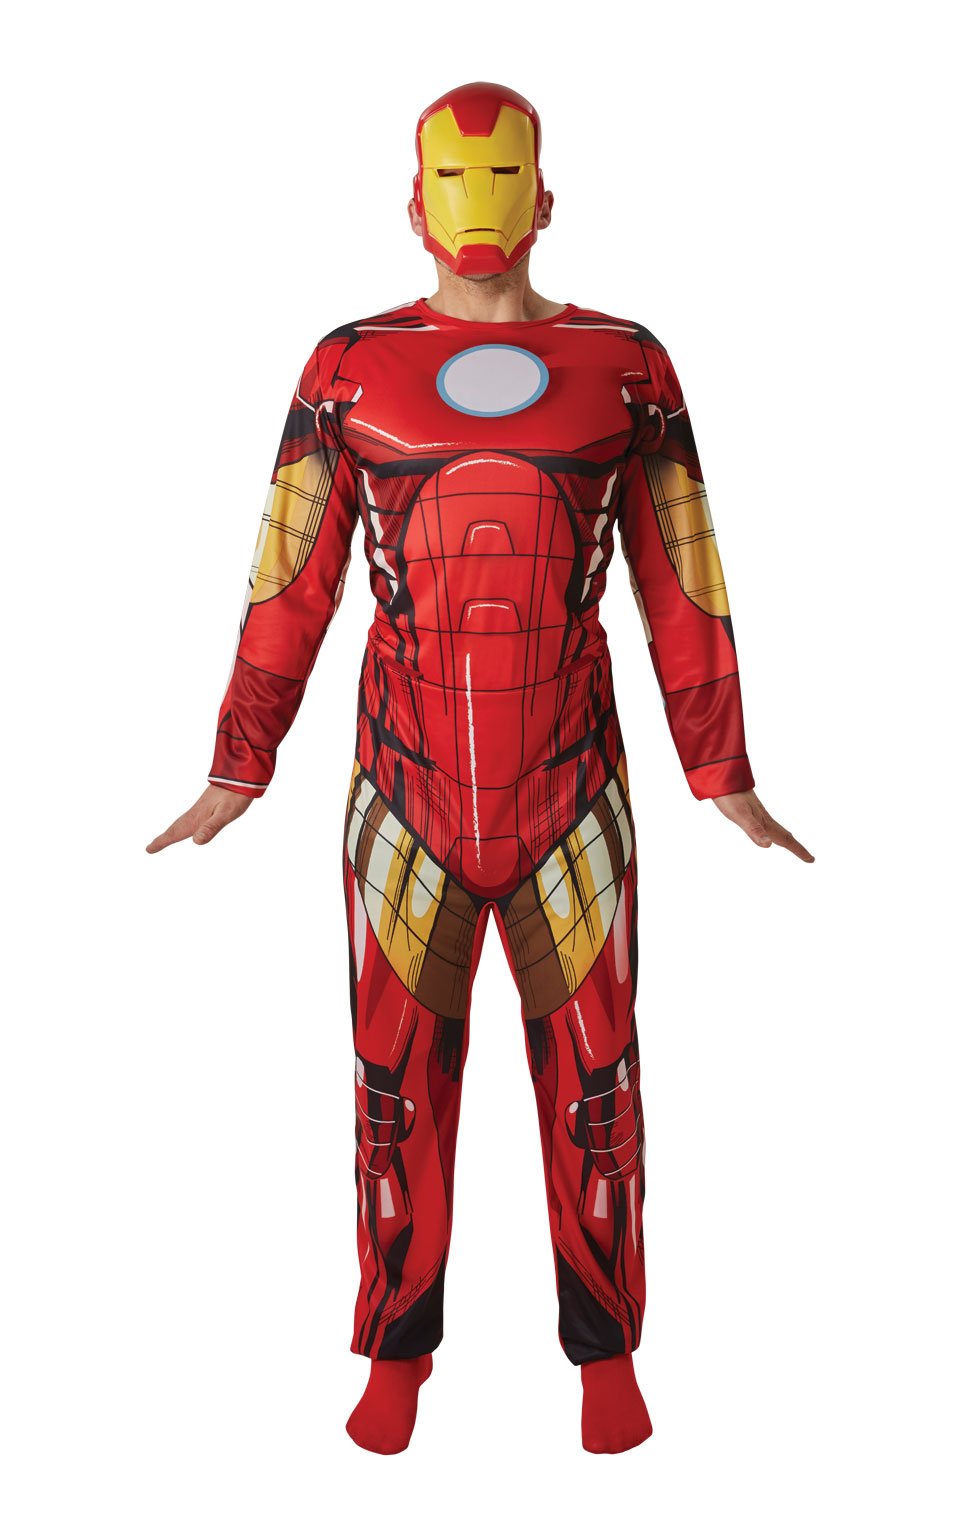 tweedehands reflecteren verband Adult Iron Man Superhero Costume I Shopzinia I Costume Shop